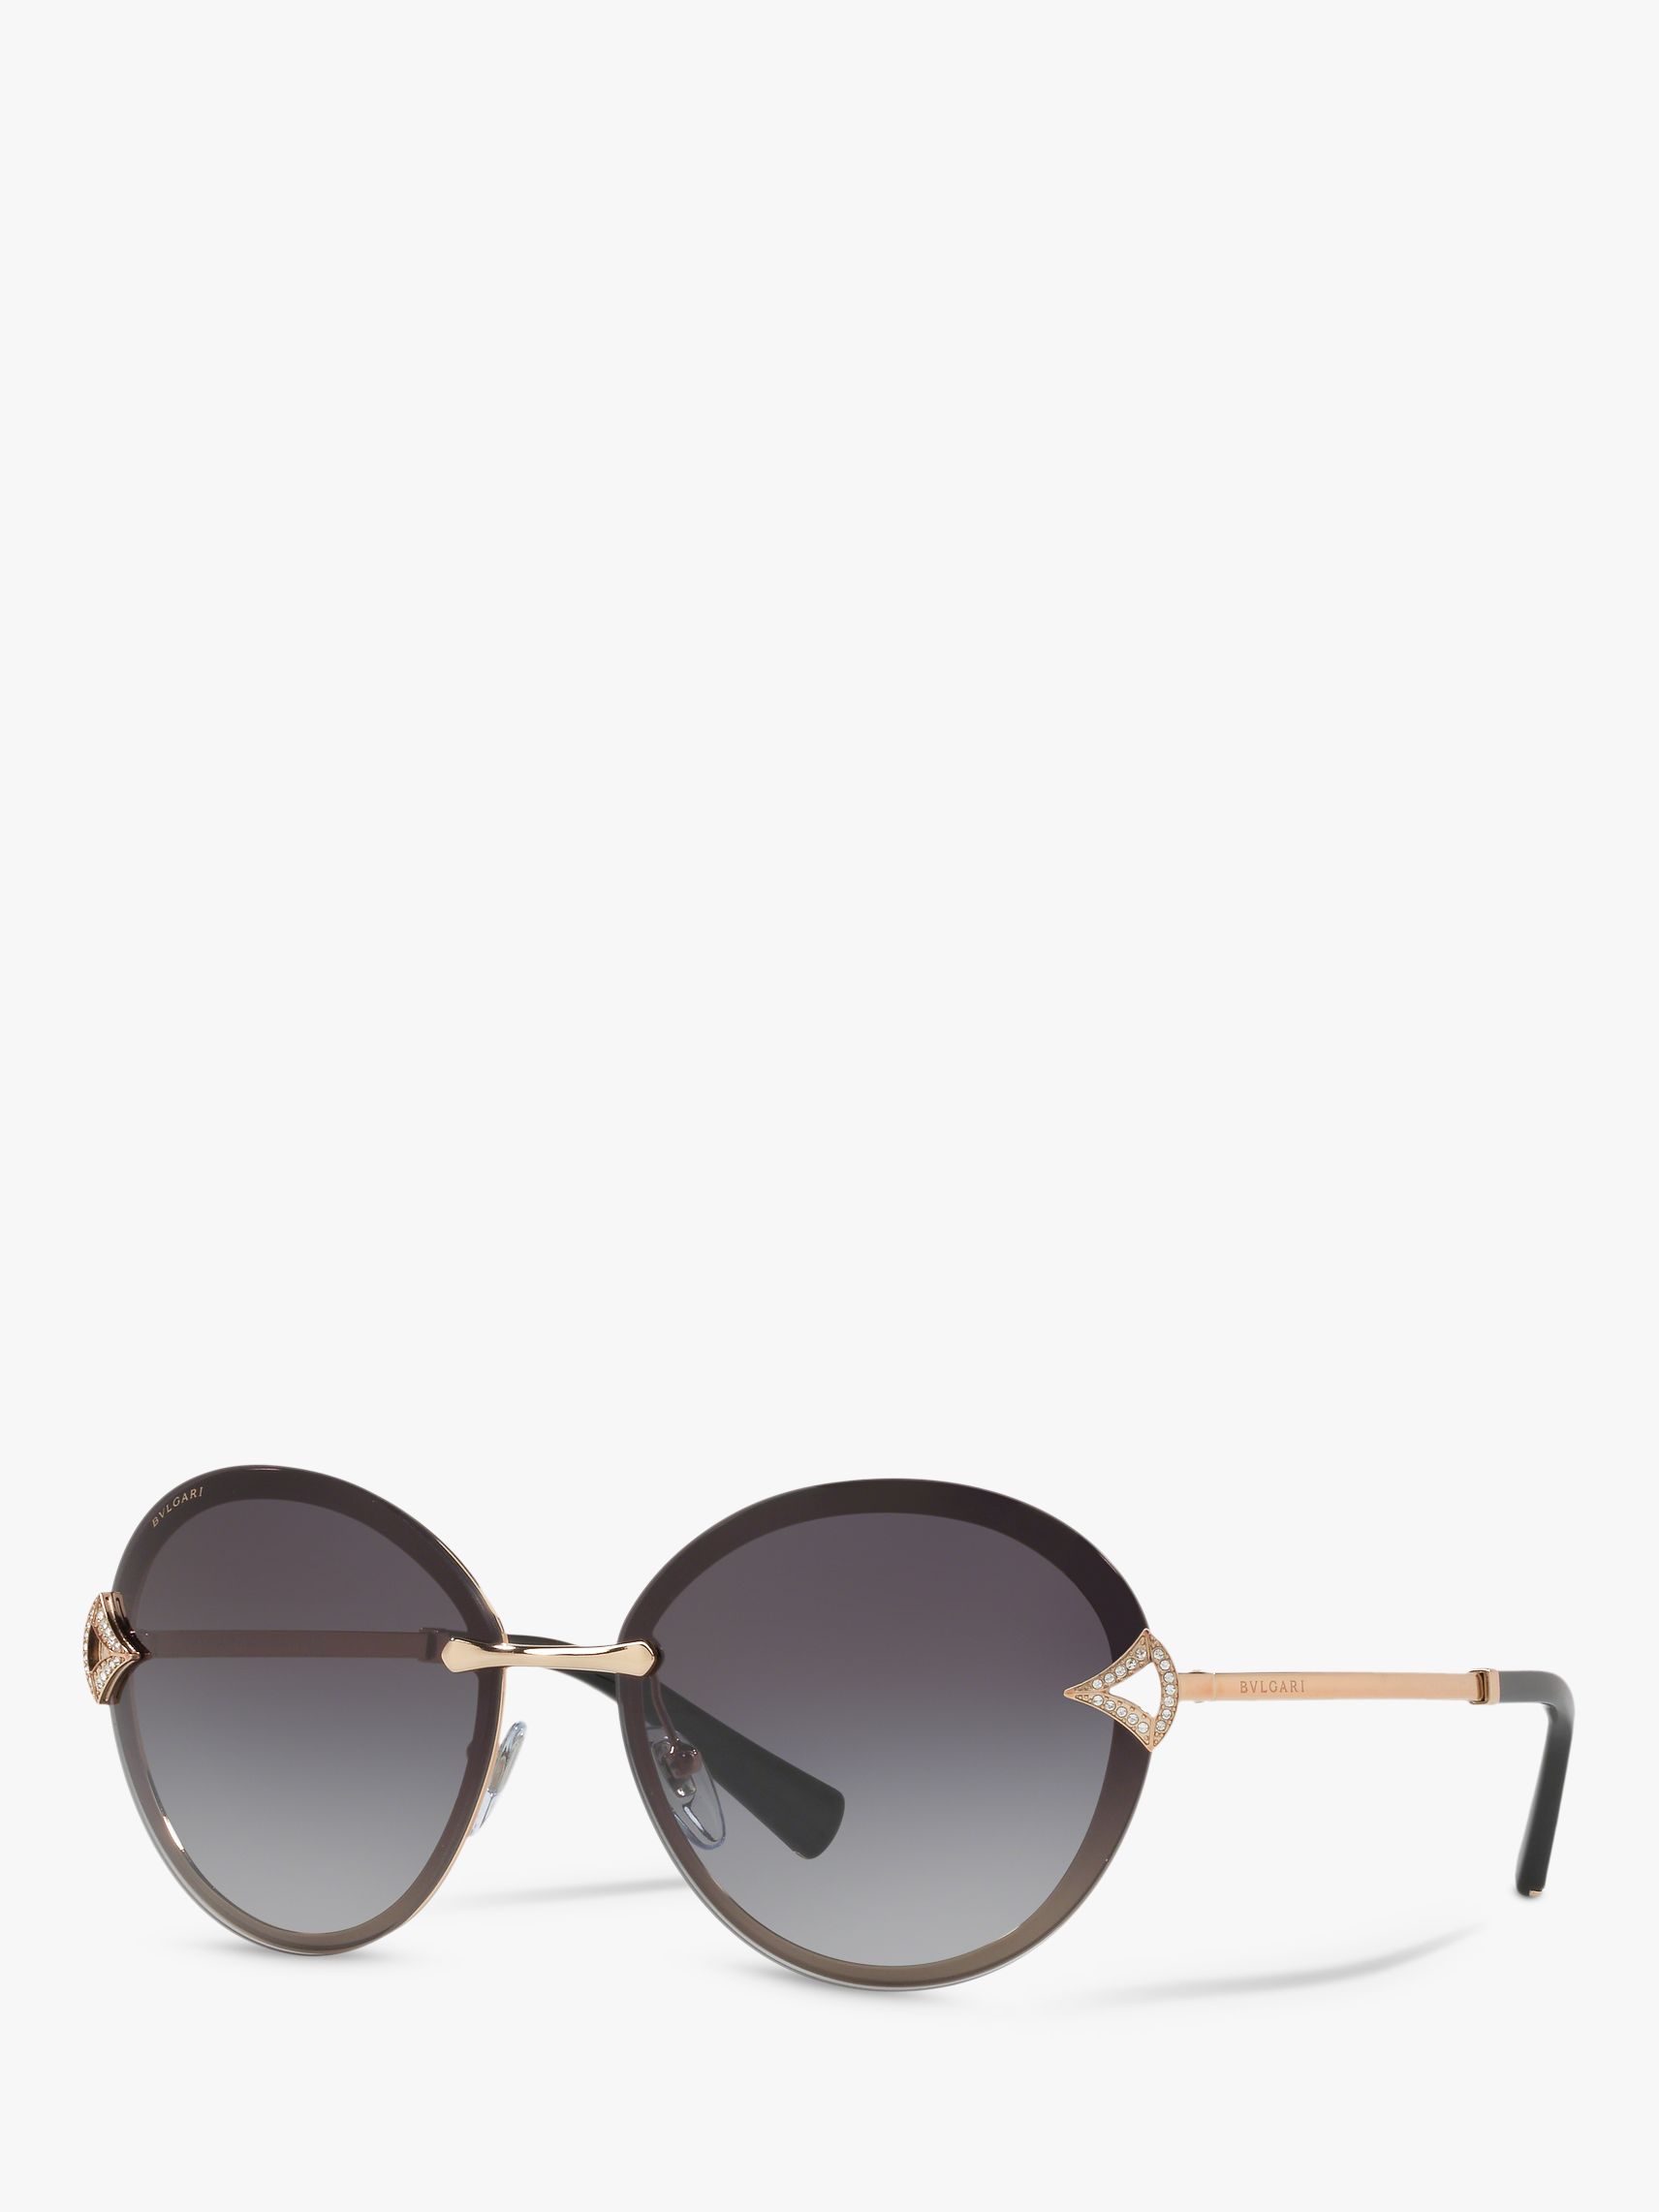 BVLGARI BV6101 Women's Embellished Round Sunglasses, Pink Gold/Grey ...